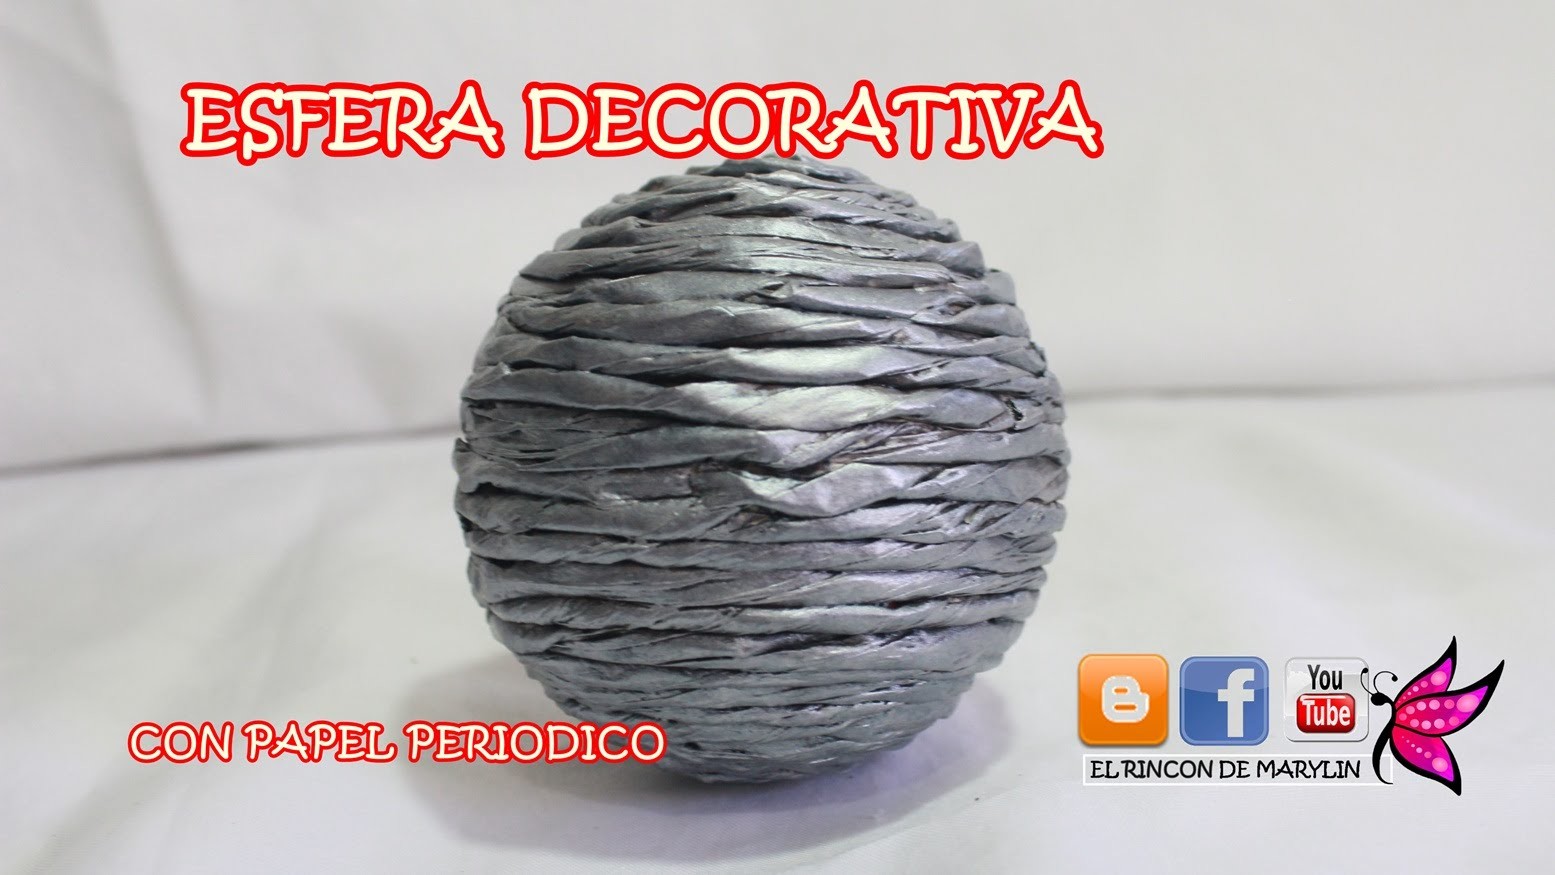 ESFERA DECORATIVA CON PAPEL PERIODICO ENRROLLADO -  Decorative sphere with newsprint funky